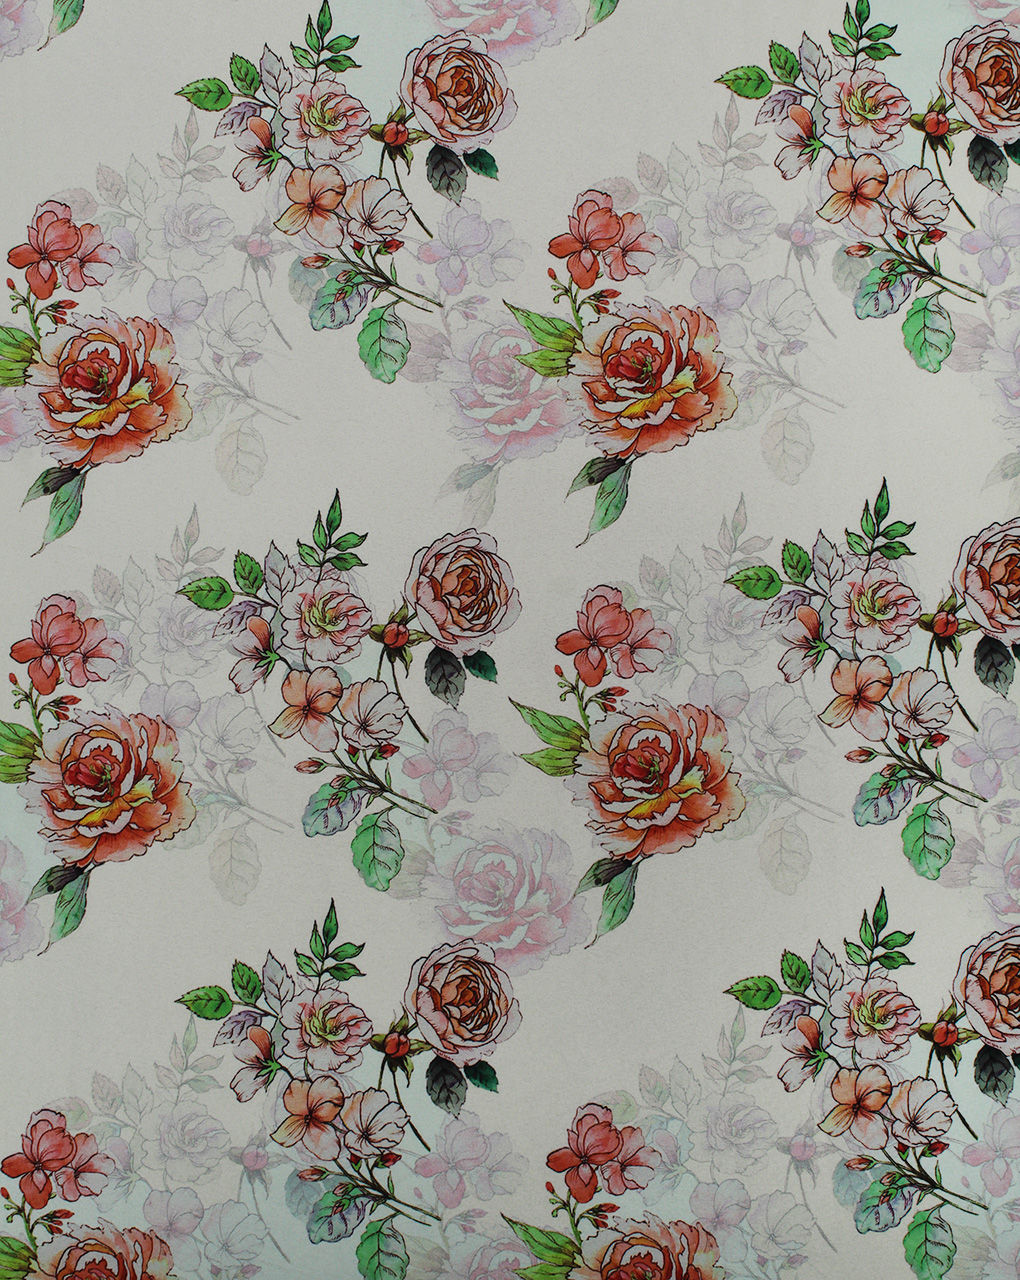 Multicolor Floral Design Polyester Digital Printed Satin Fabric